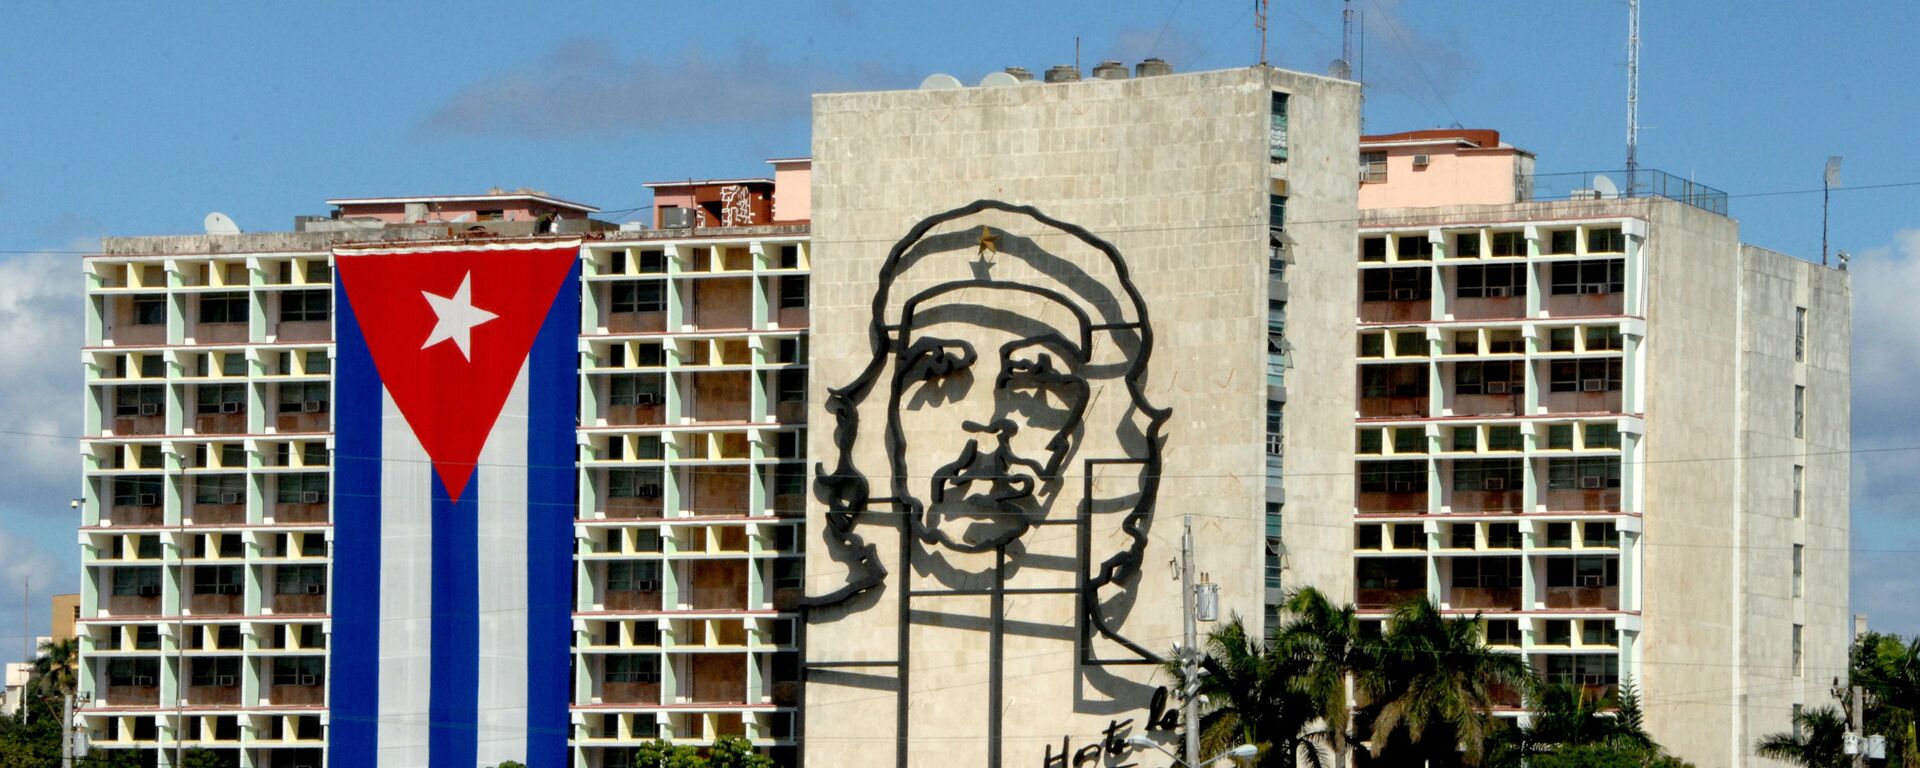 Bandera cubana en La Habana, capital de Cuba - Sputnik Mundo, 1920, 28.12.2018